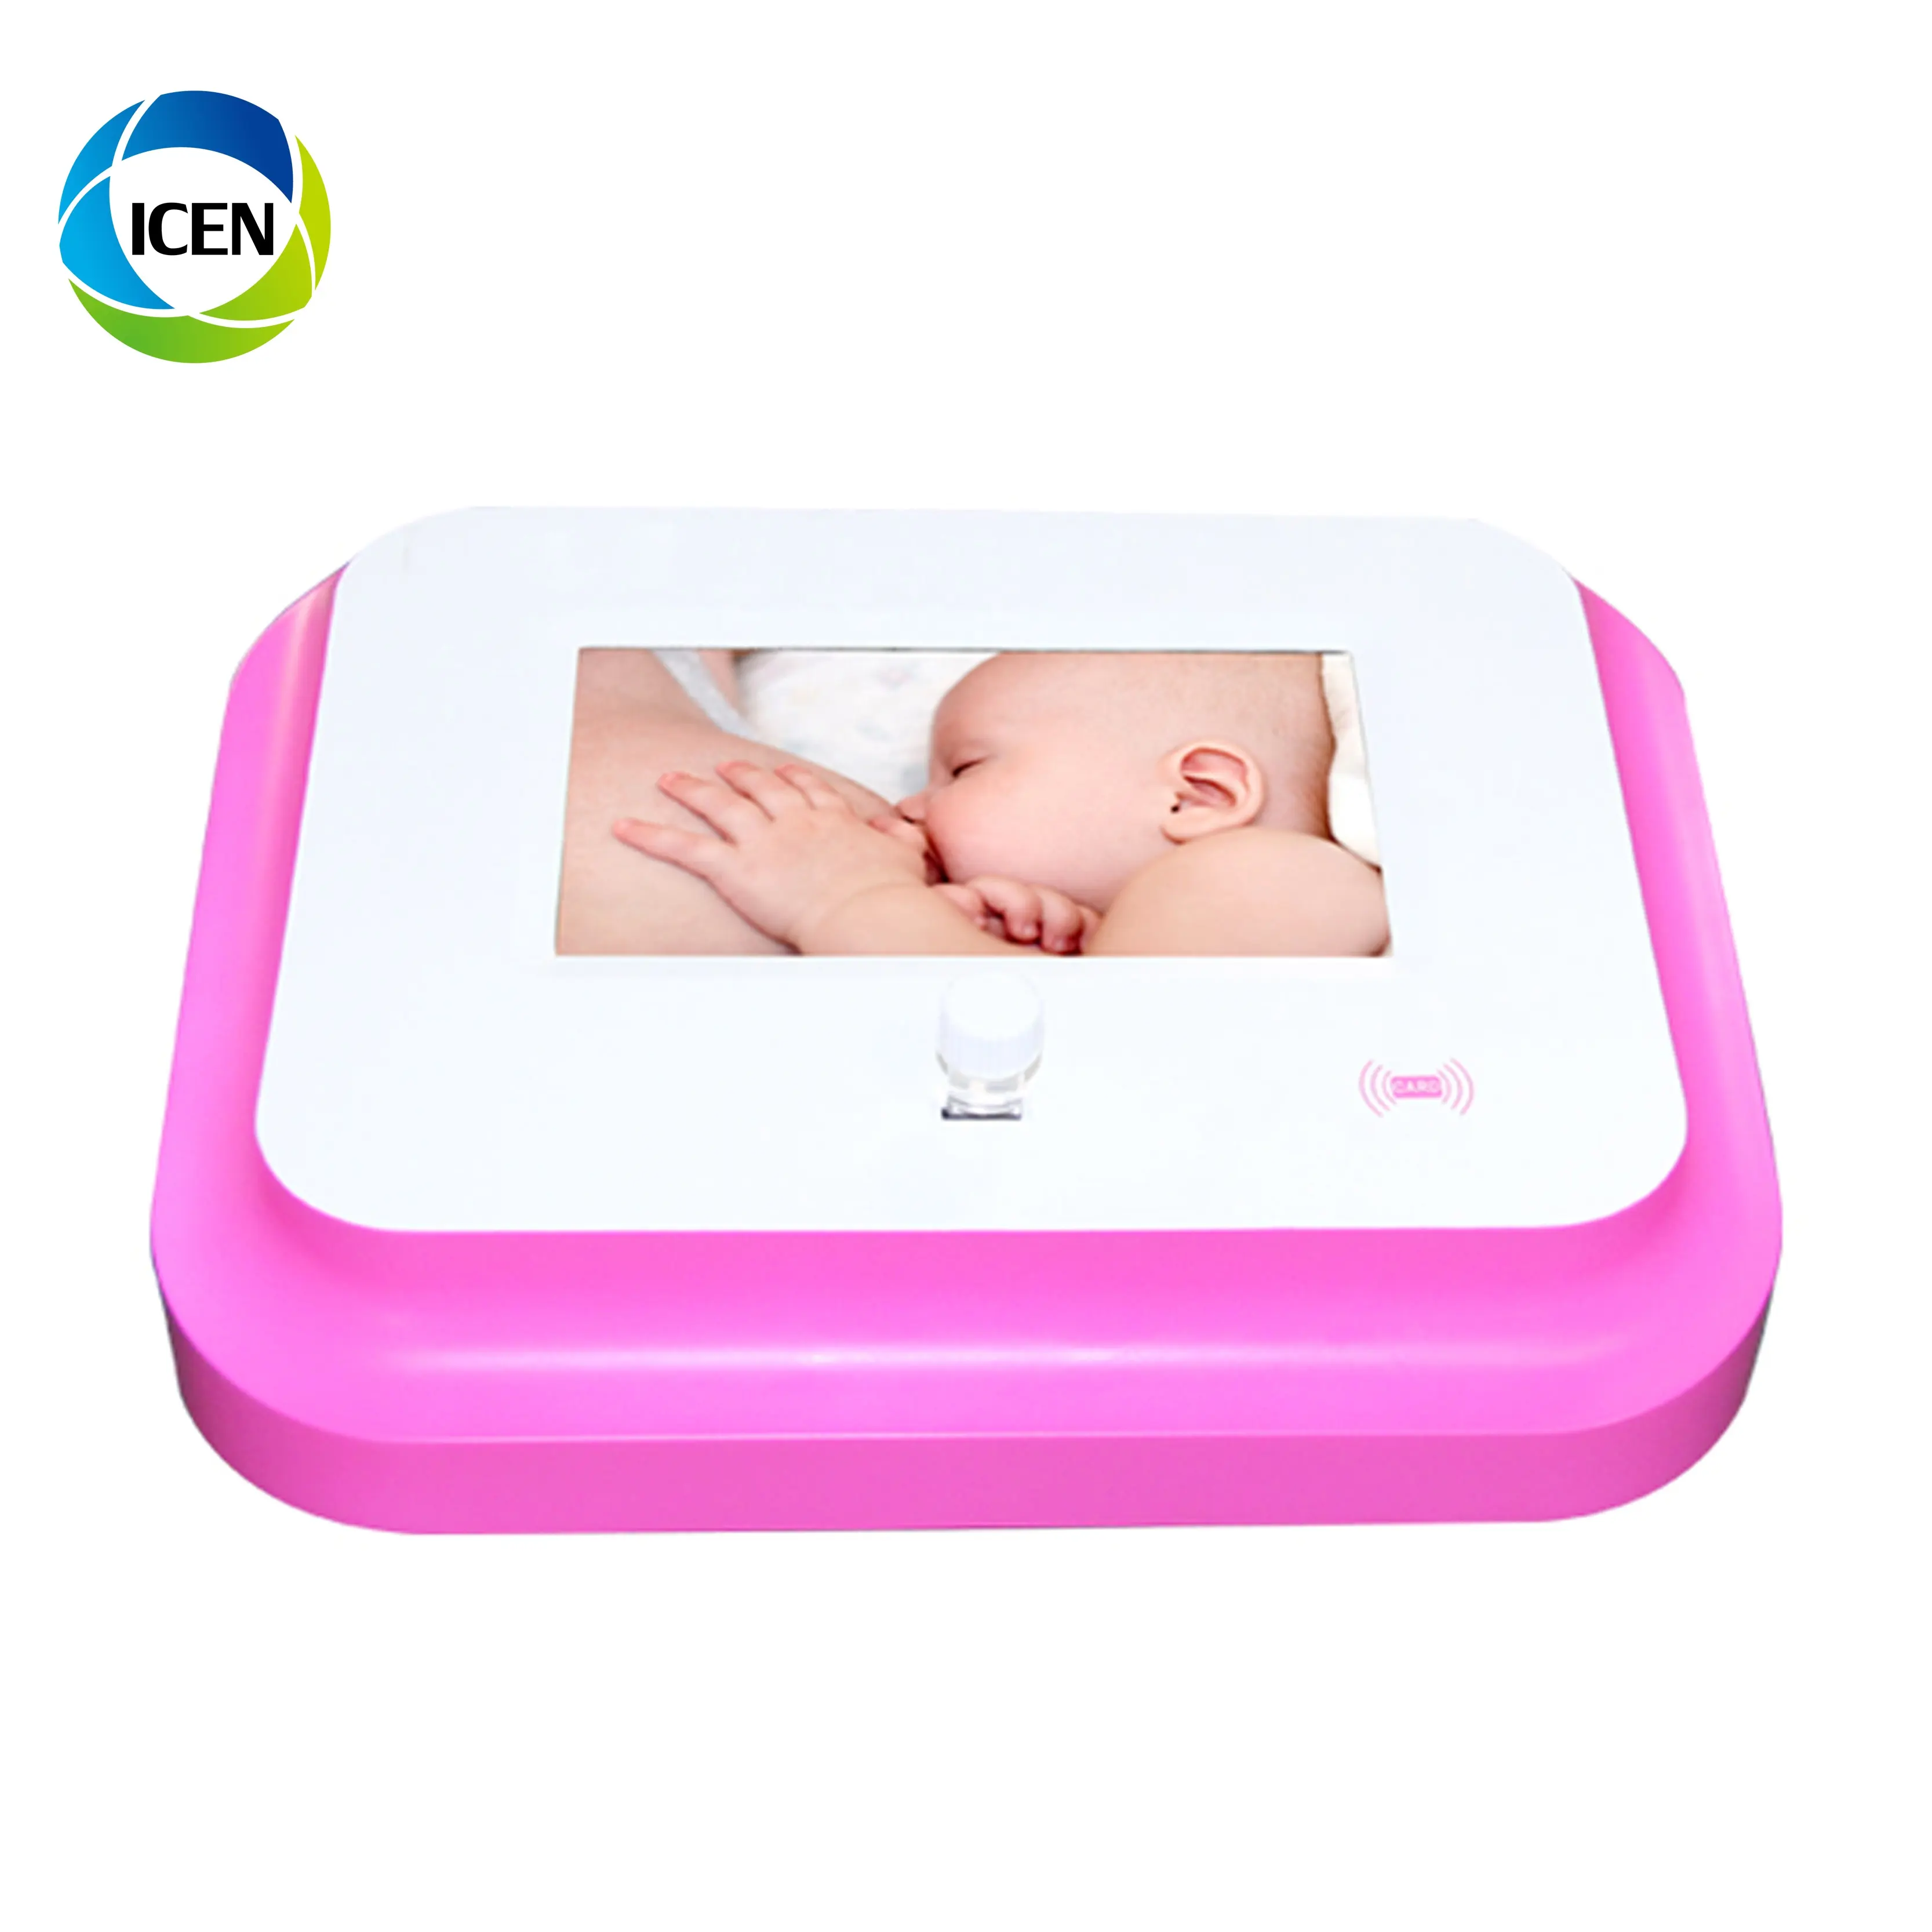 IN-B007A portátil IR leche materna analizador para pruebas de nutrición infantil de